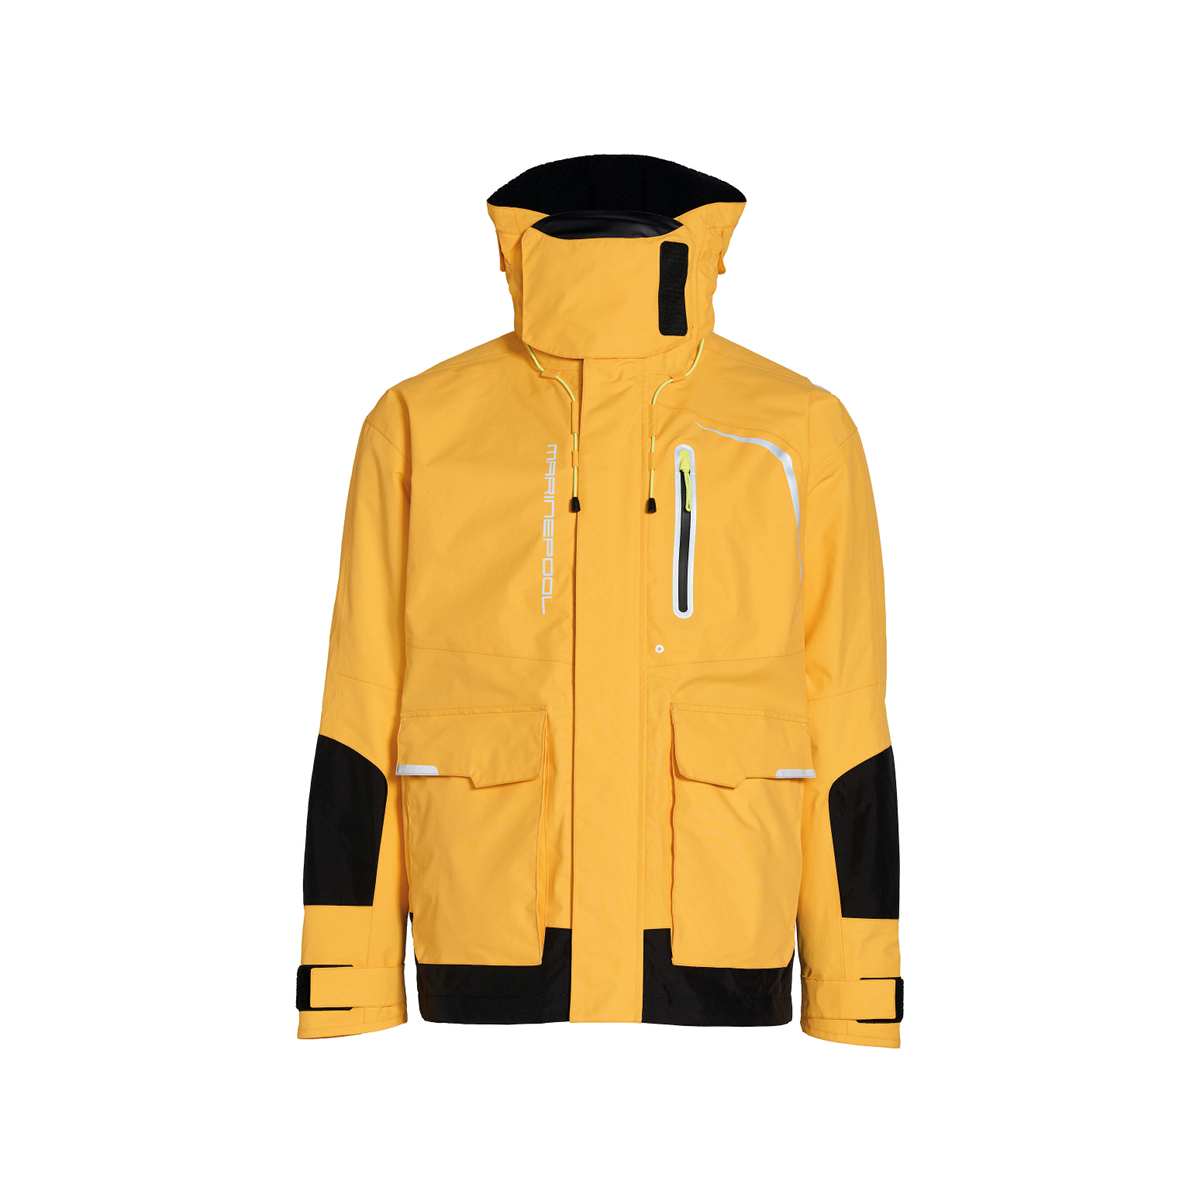 Marinepool Hobart 5 veste de voile Offshore homme jaune-noir, taille M